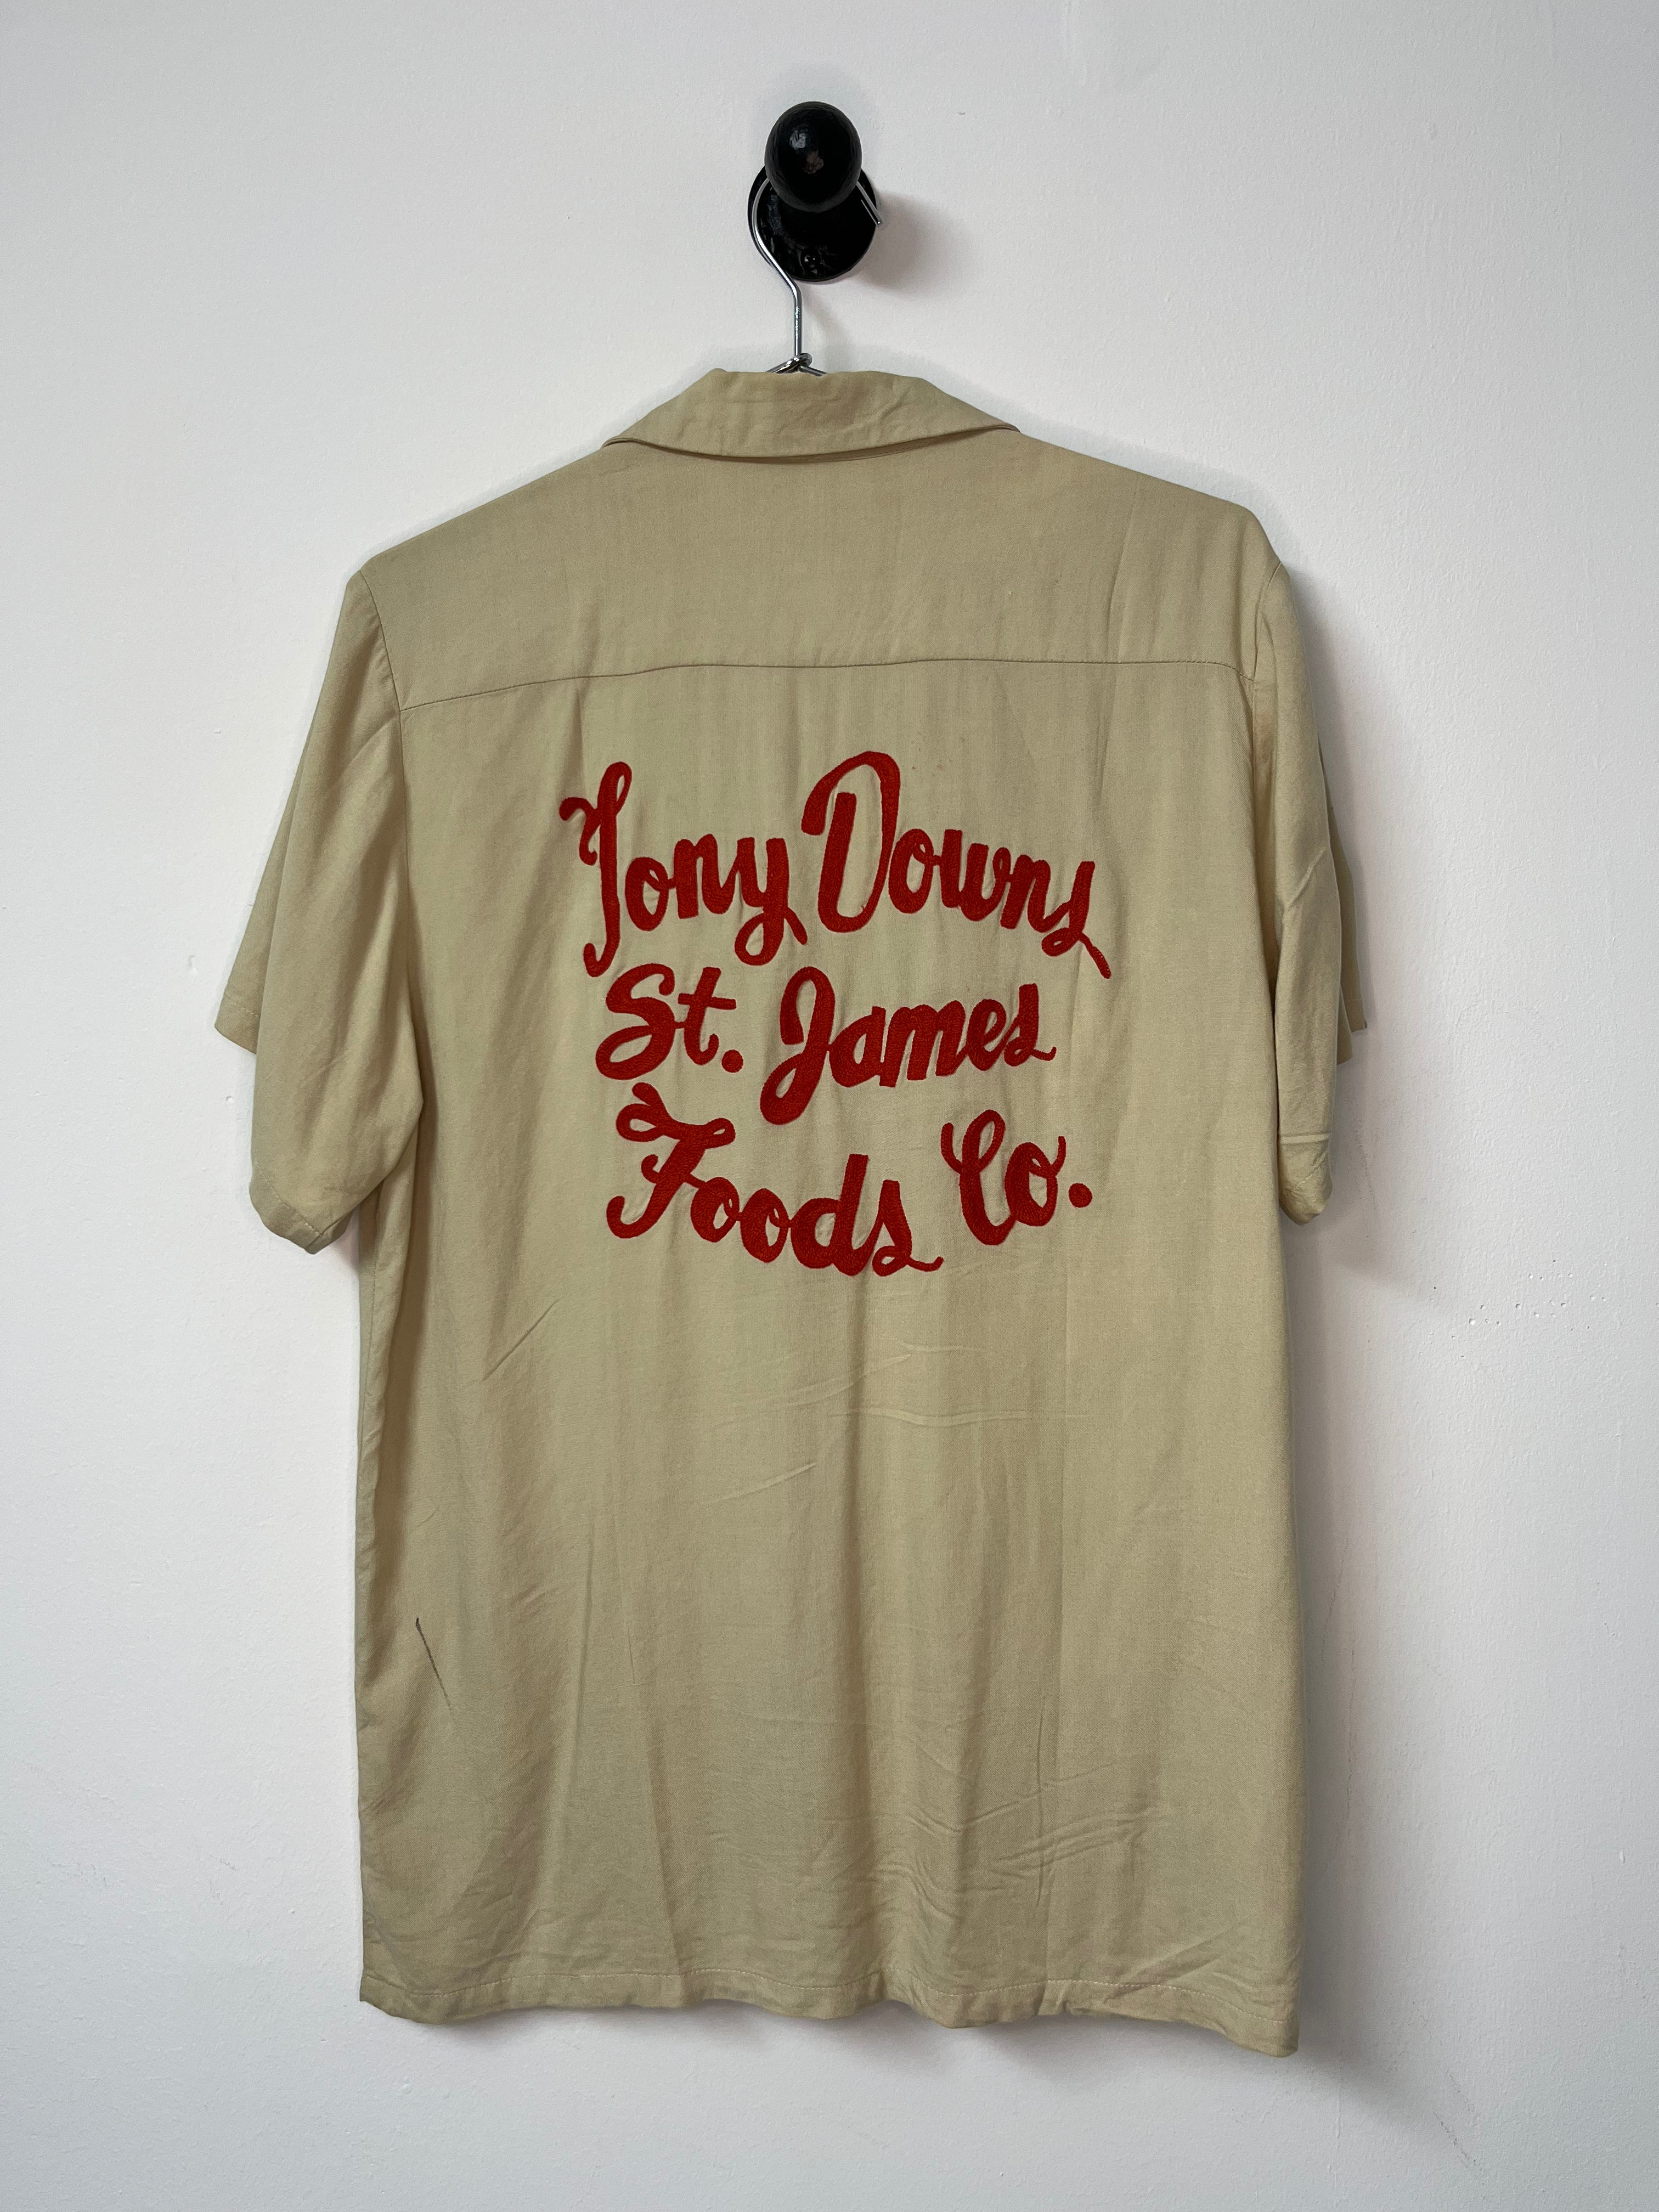 1959-60 Tony Downs Food Co. Loop Collar Bowling Shirt Houston Brand - Sand/Scarlet - M